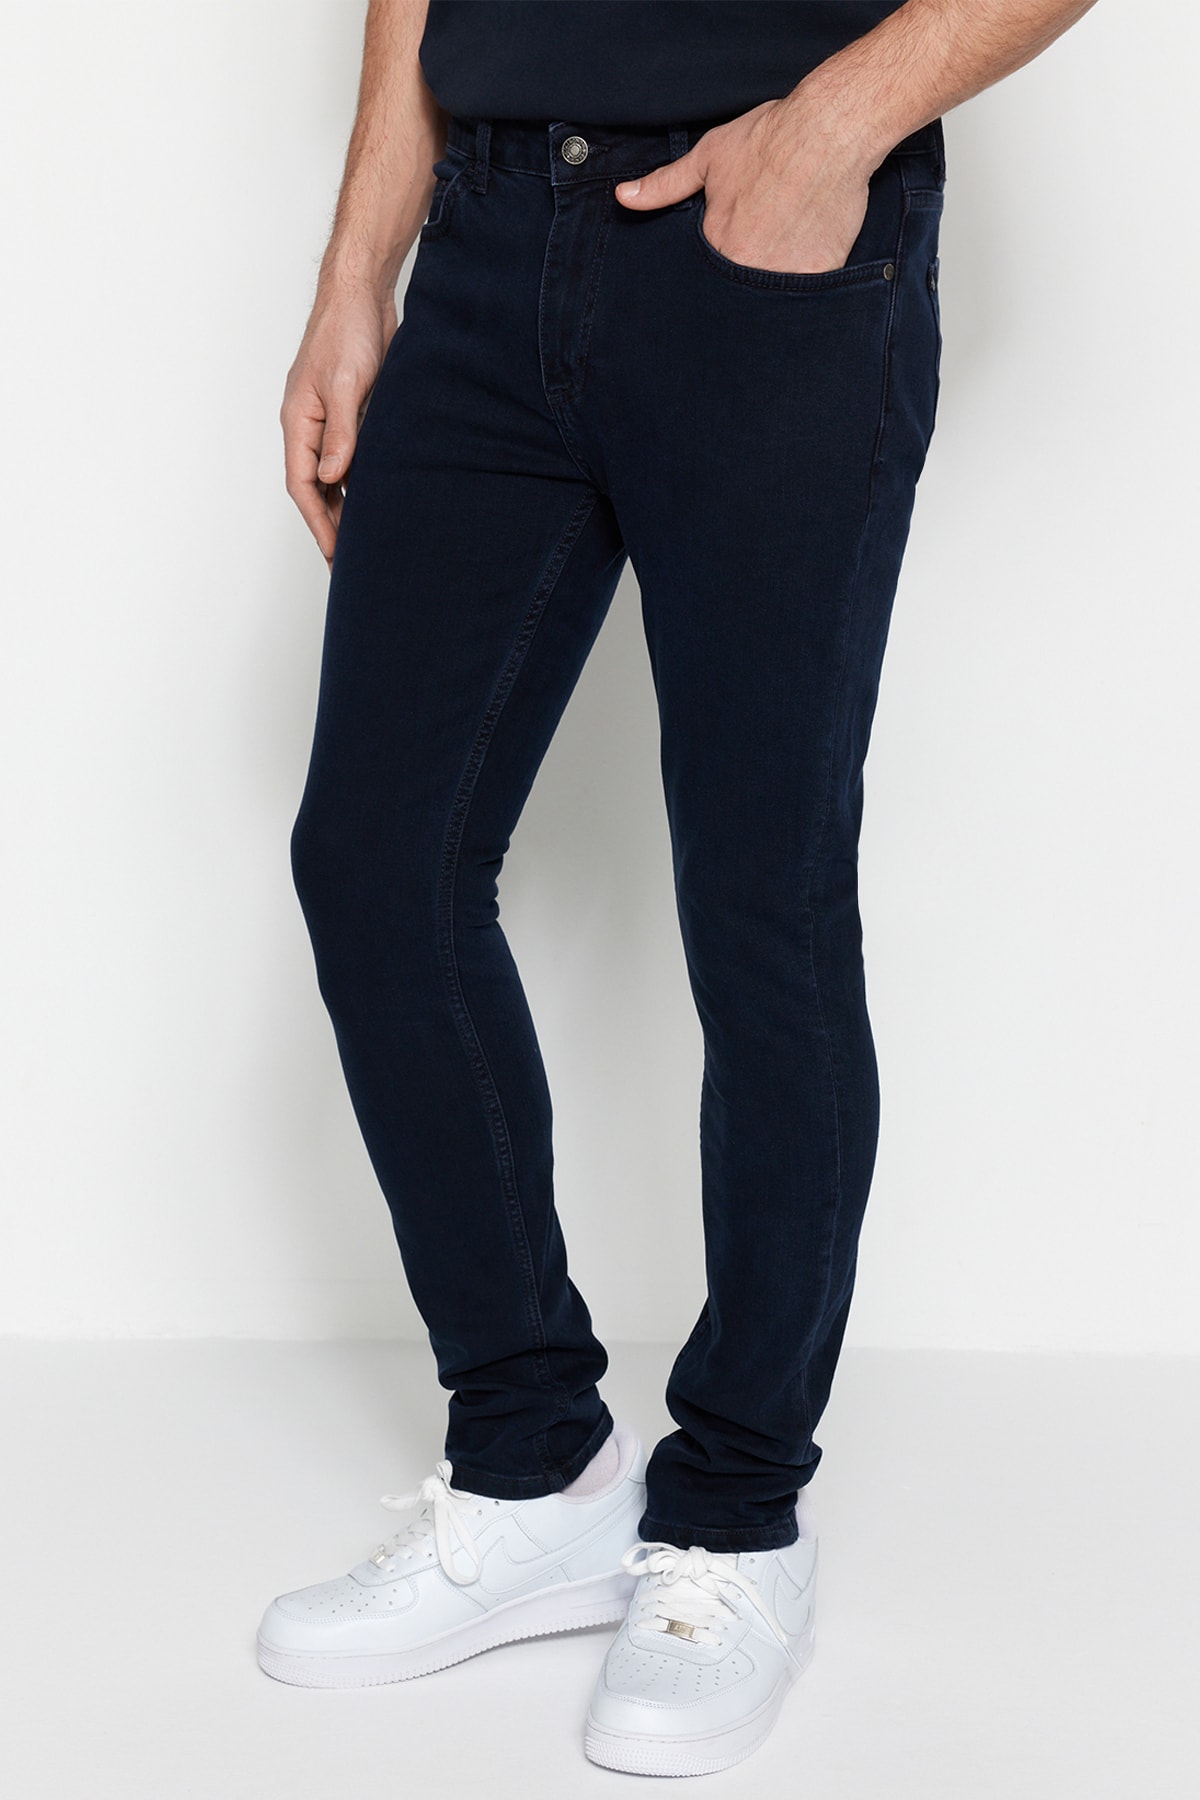 Trendyol Dark Navy Men's Premium Stretchy Fabric Skinny Fit Jeans Denim Trousers